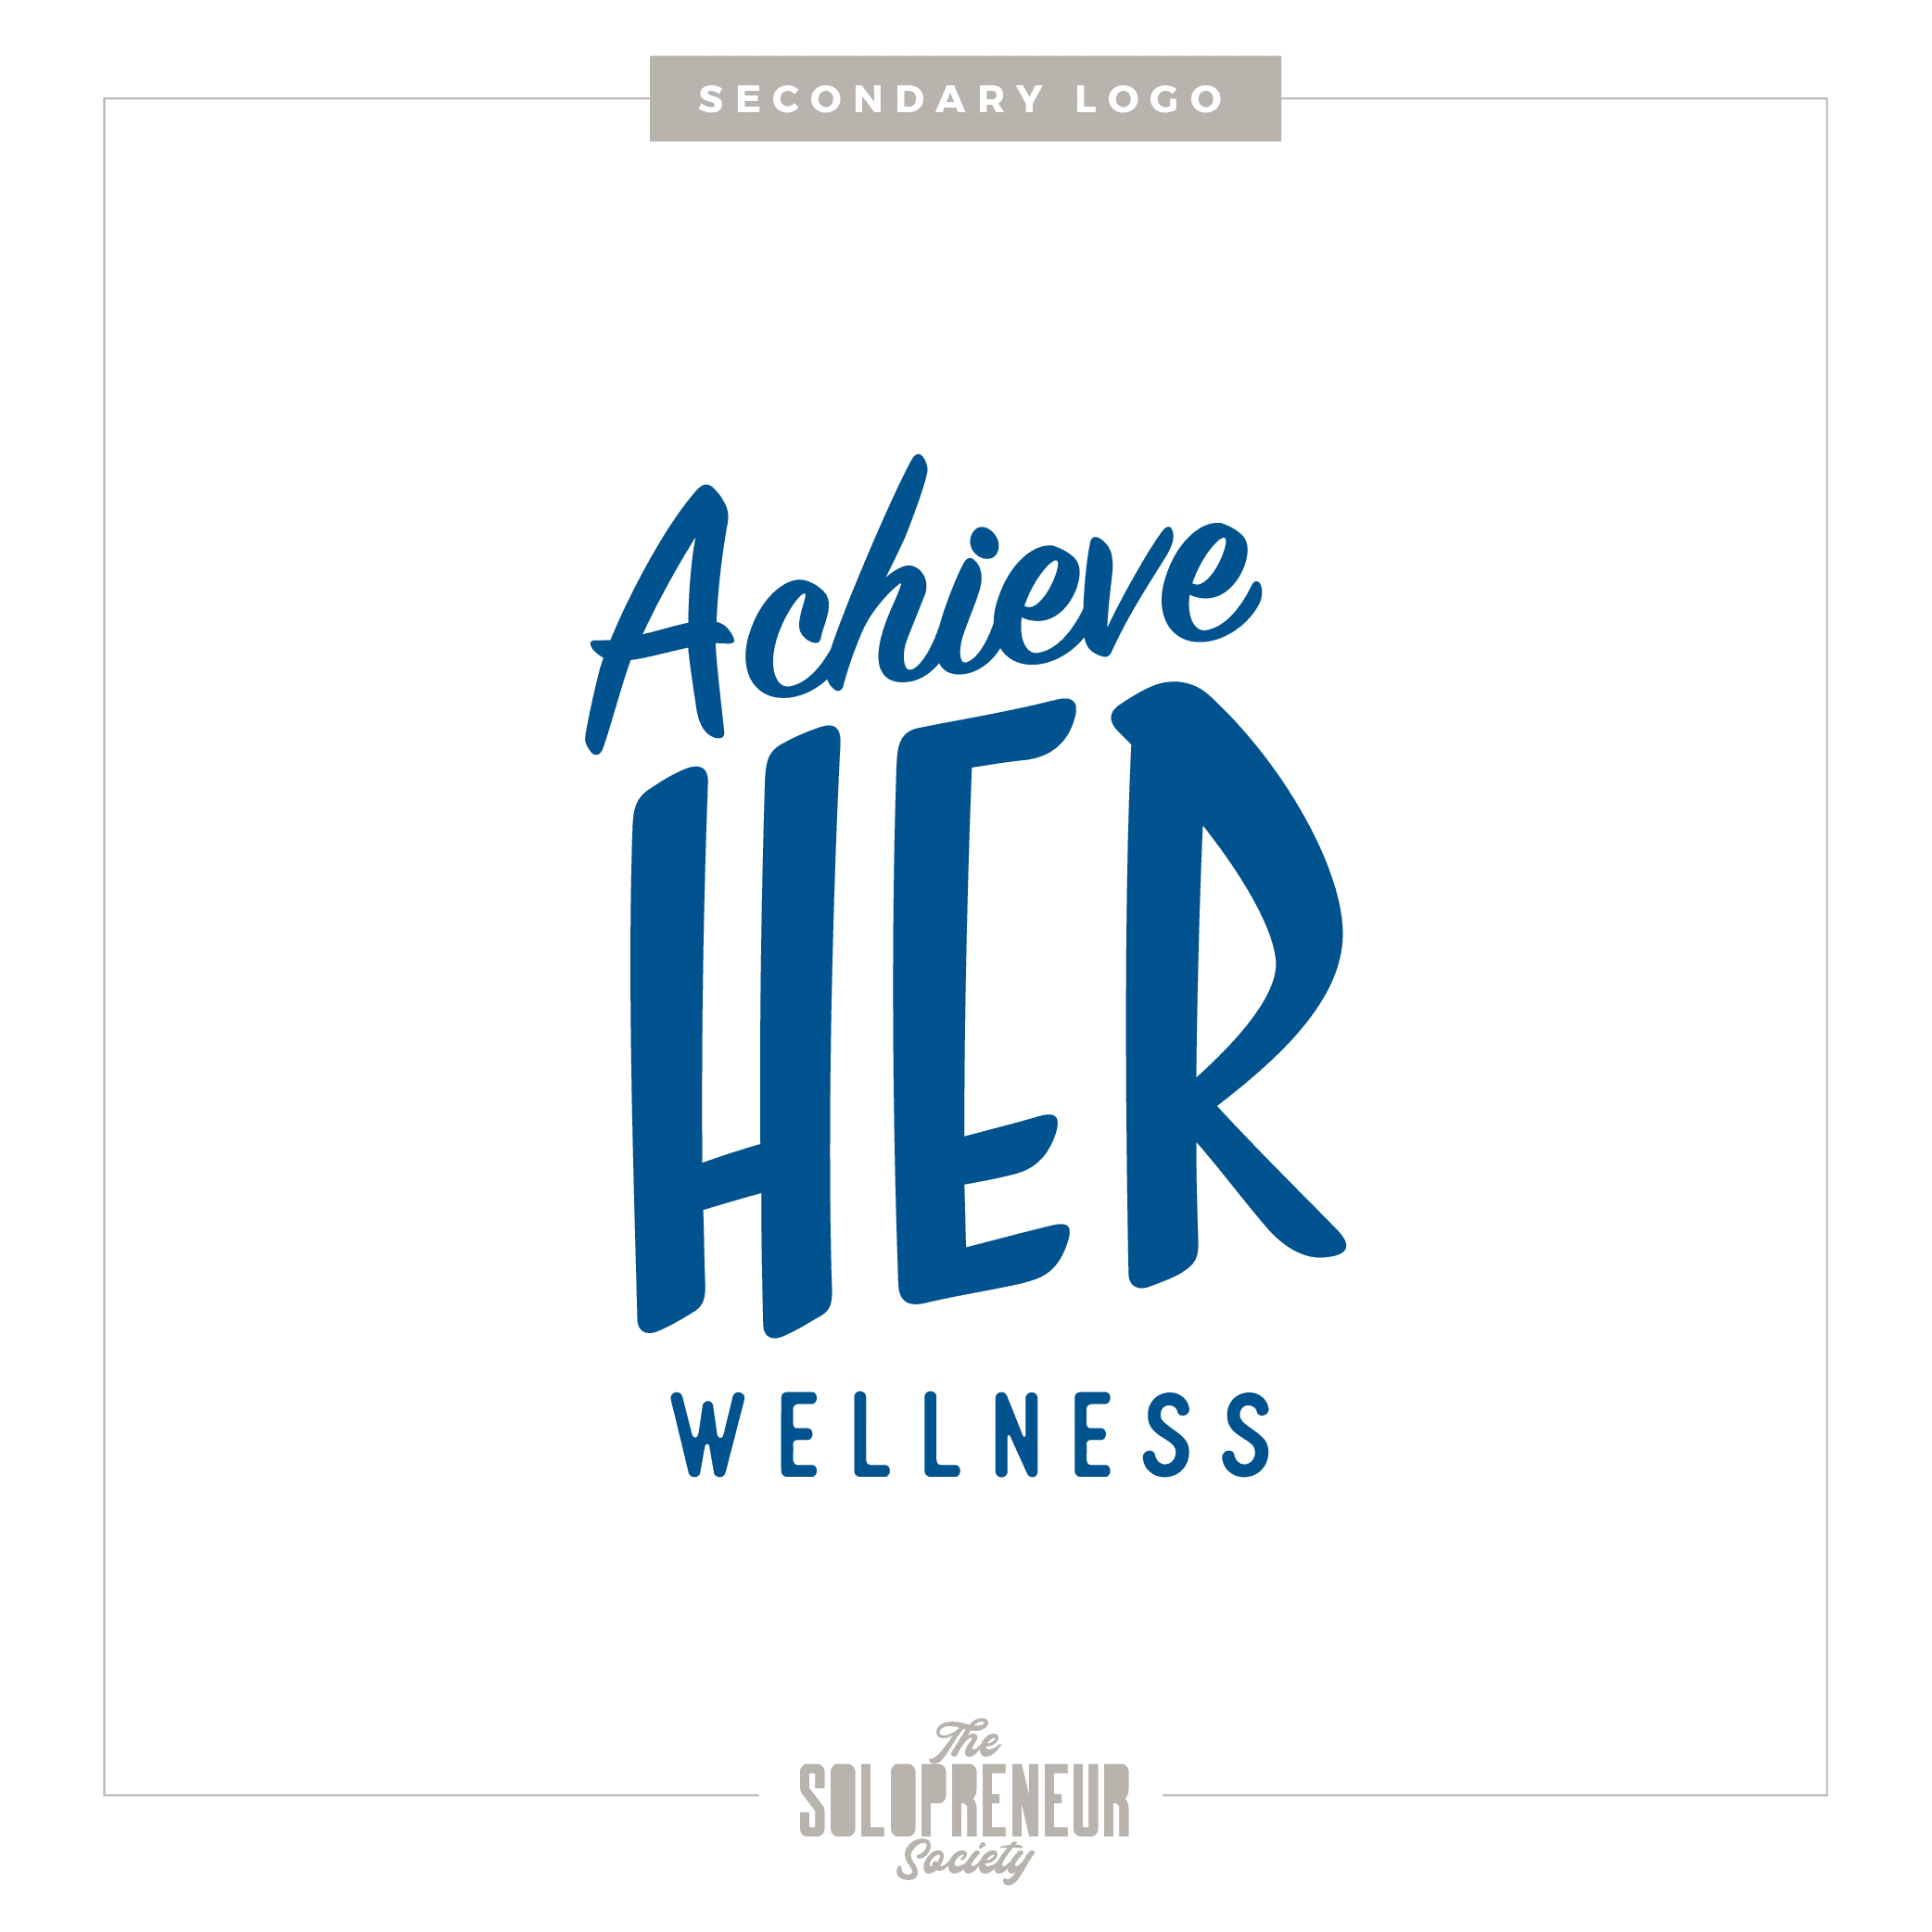 AchieveHer Wellness Secondary Logo